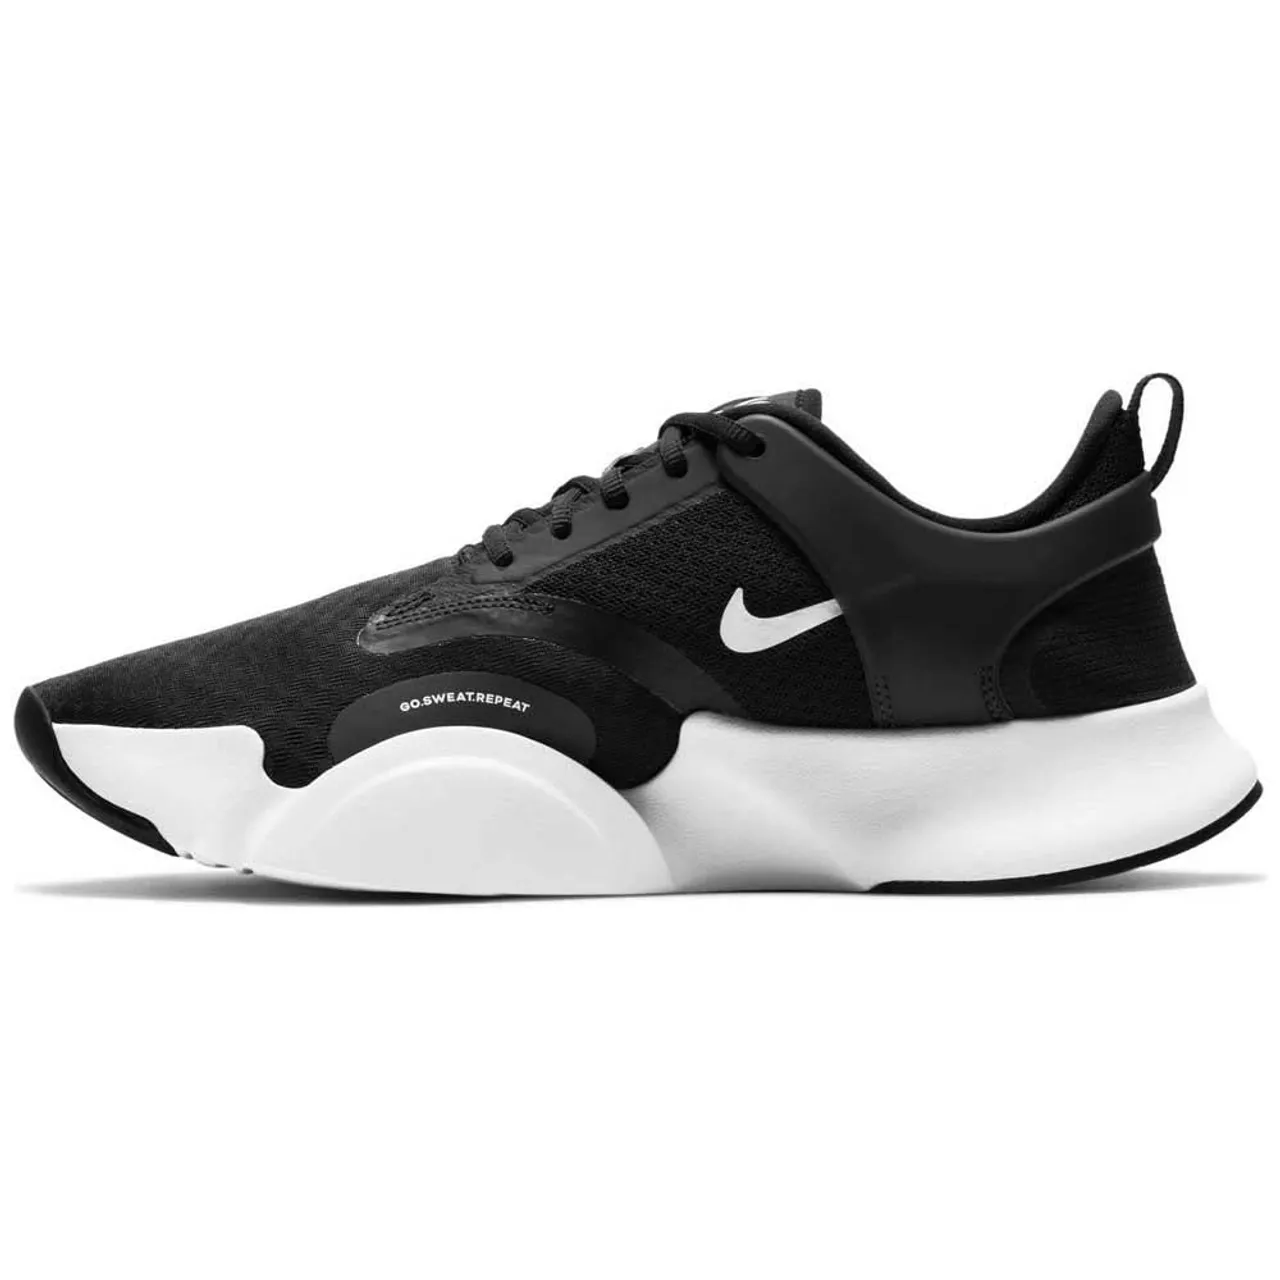 Nike Men's superrep 2 Running Shoe